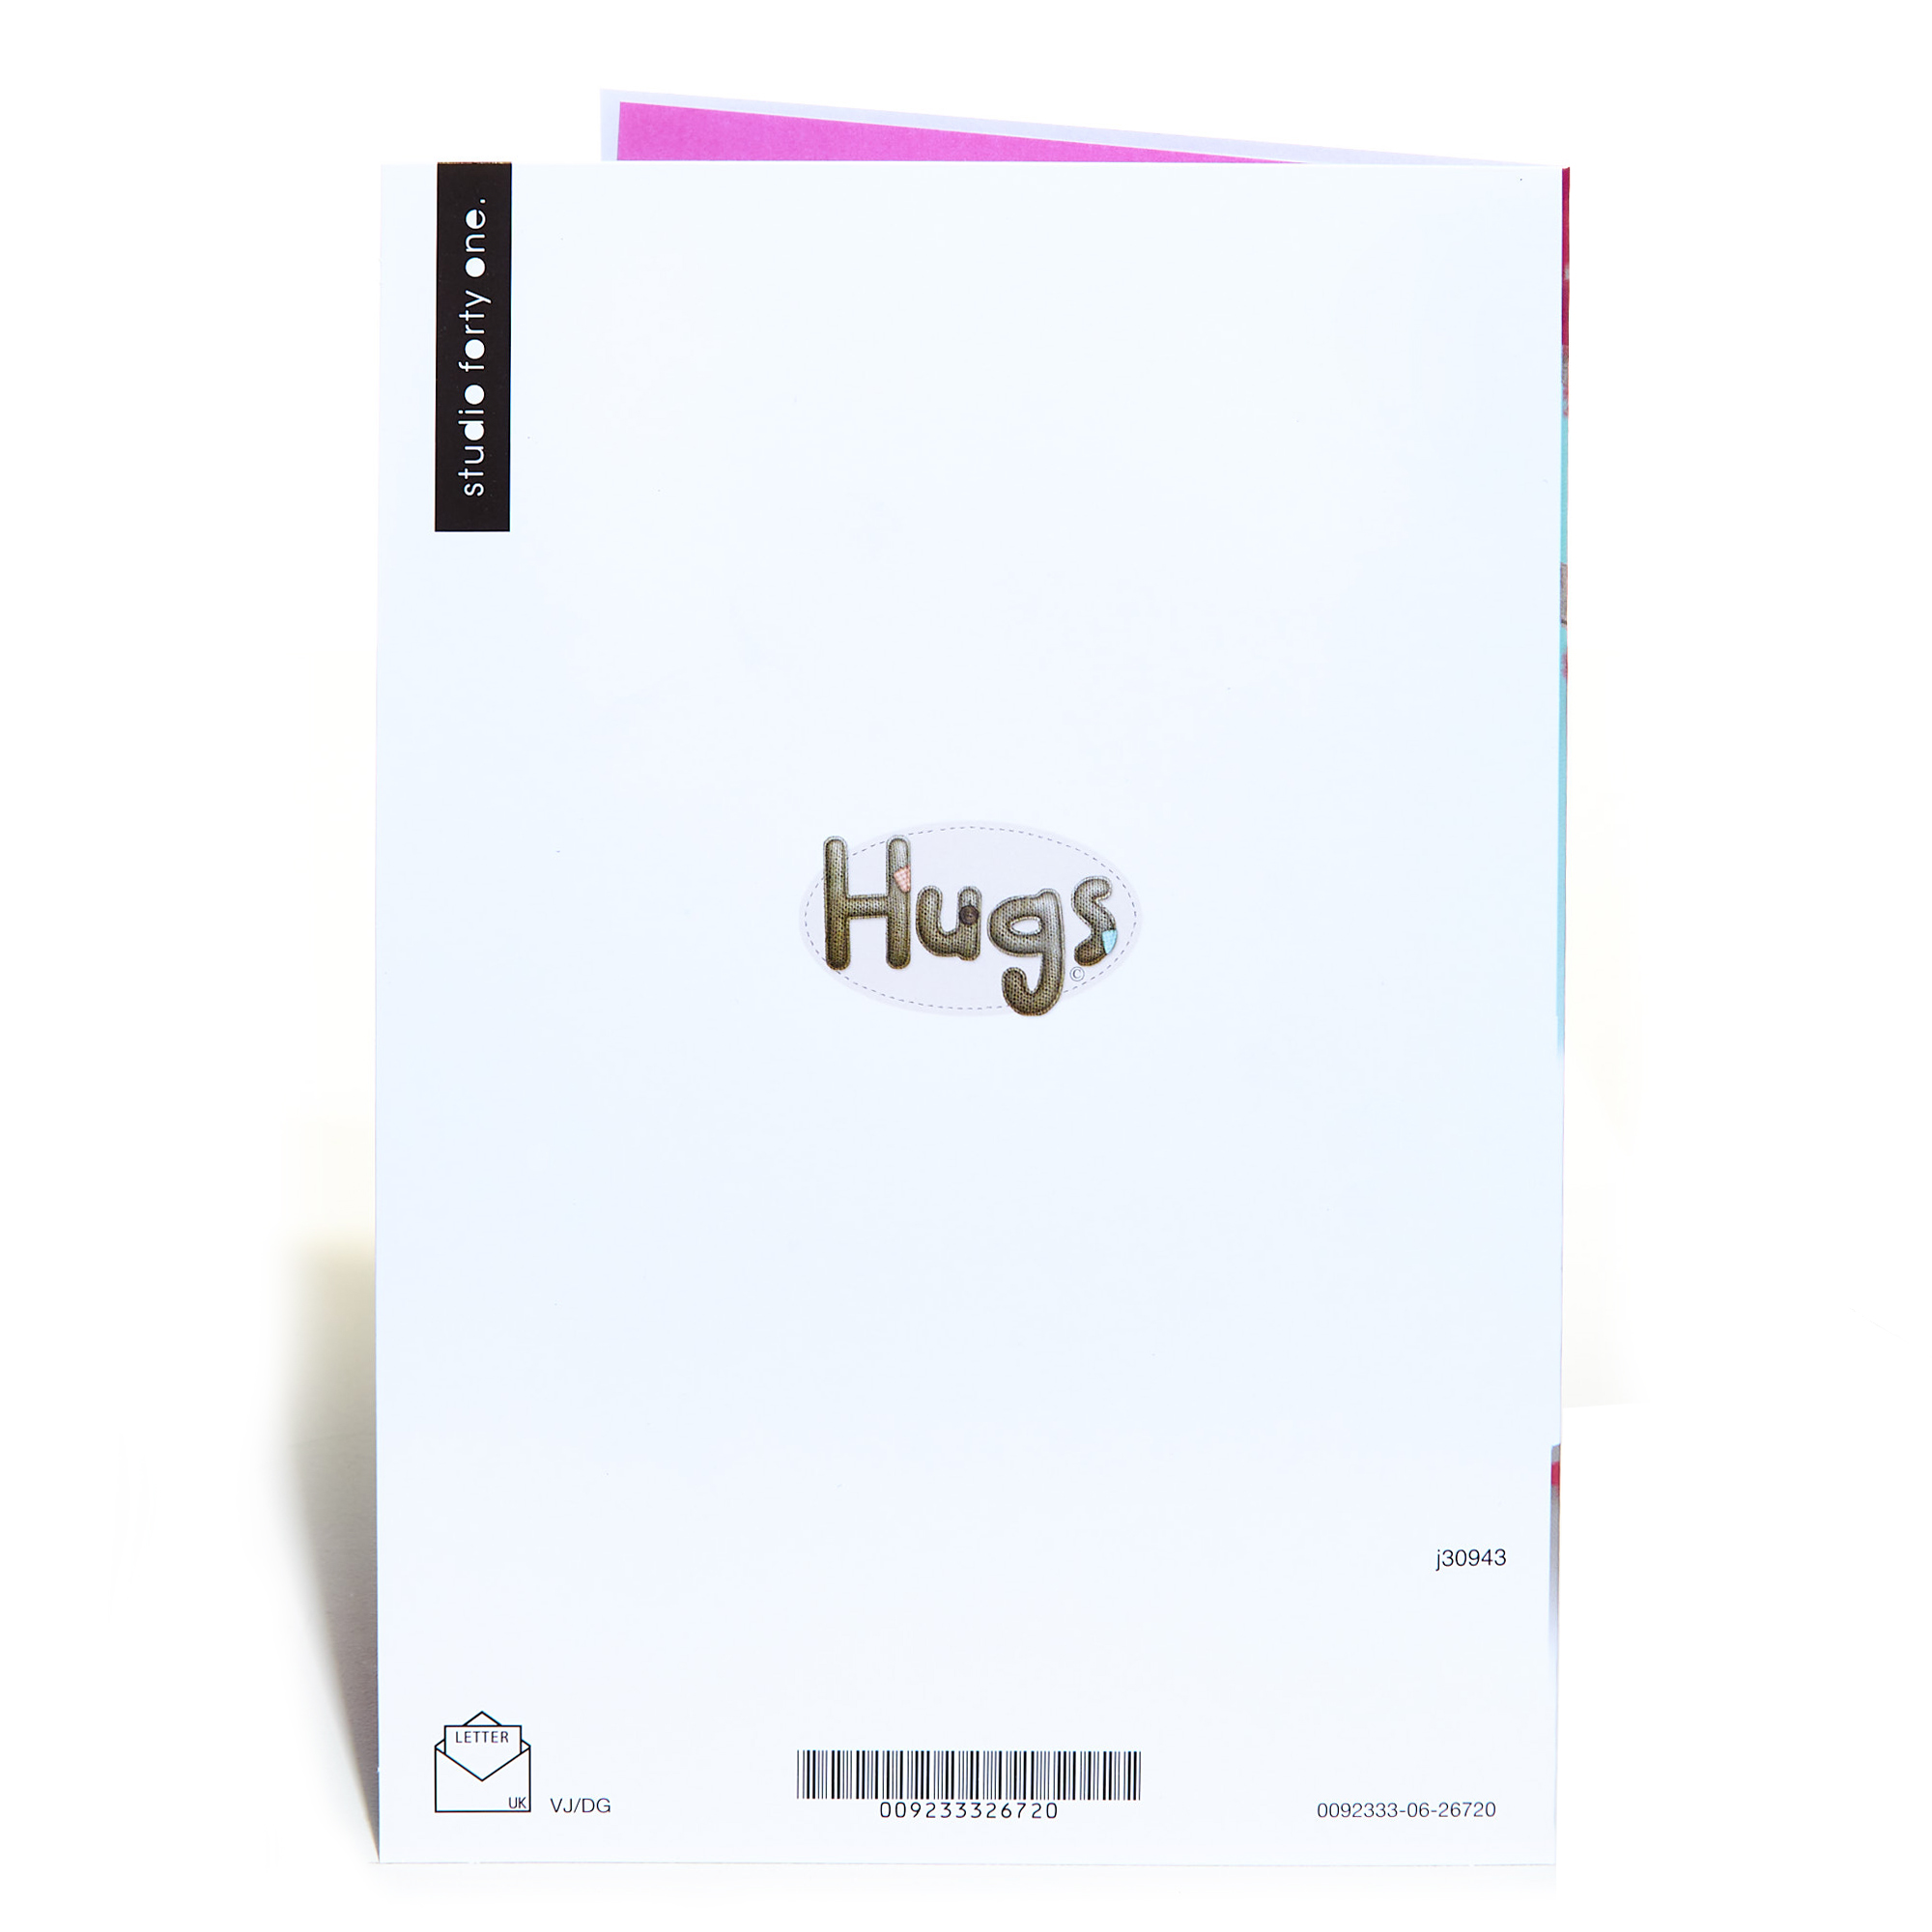 Hugs Bear Anniversary Card - Forever & Always